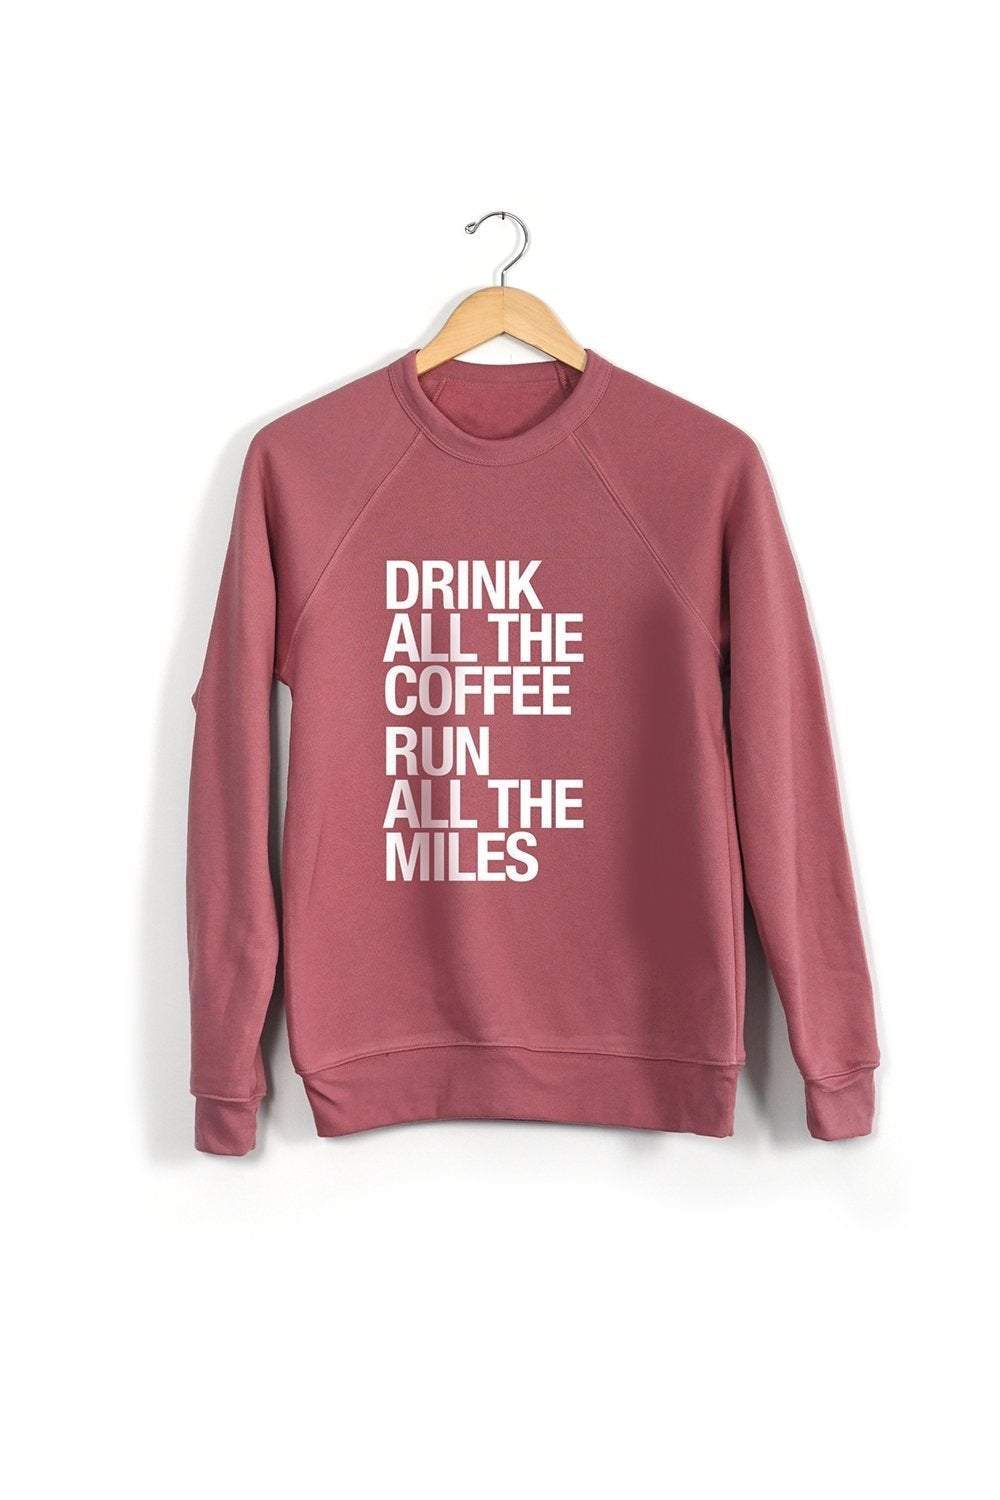 Sarah Marie Design Studio Sweatshirt XSmall / Mauve Run All the Miles, Drink All the Coffee Sweatshirt